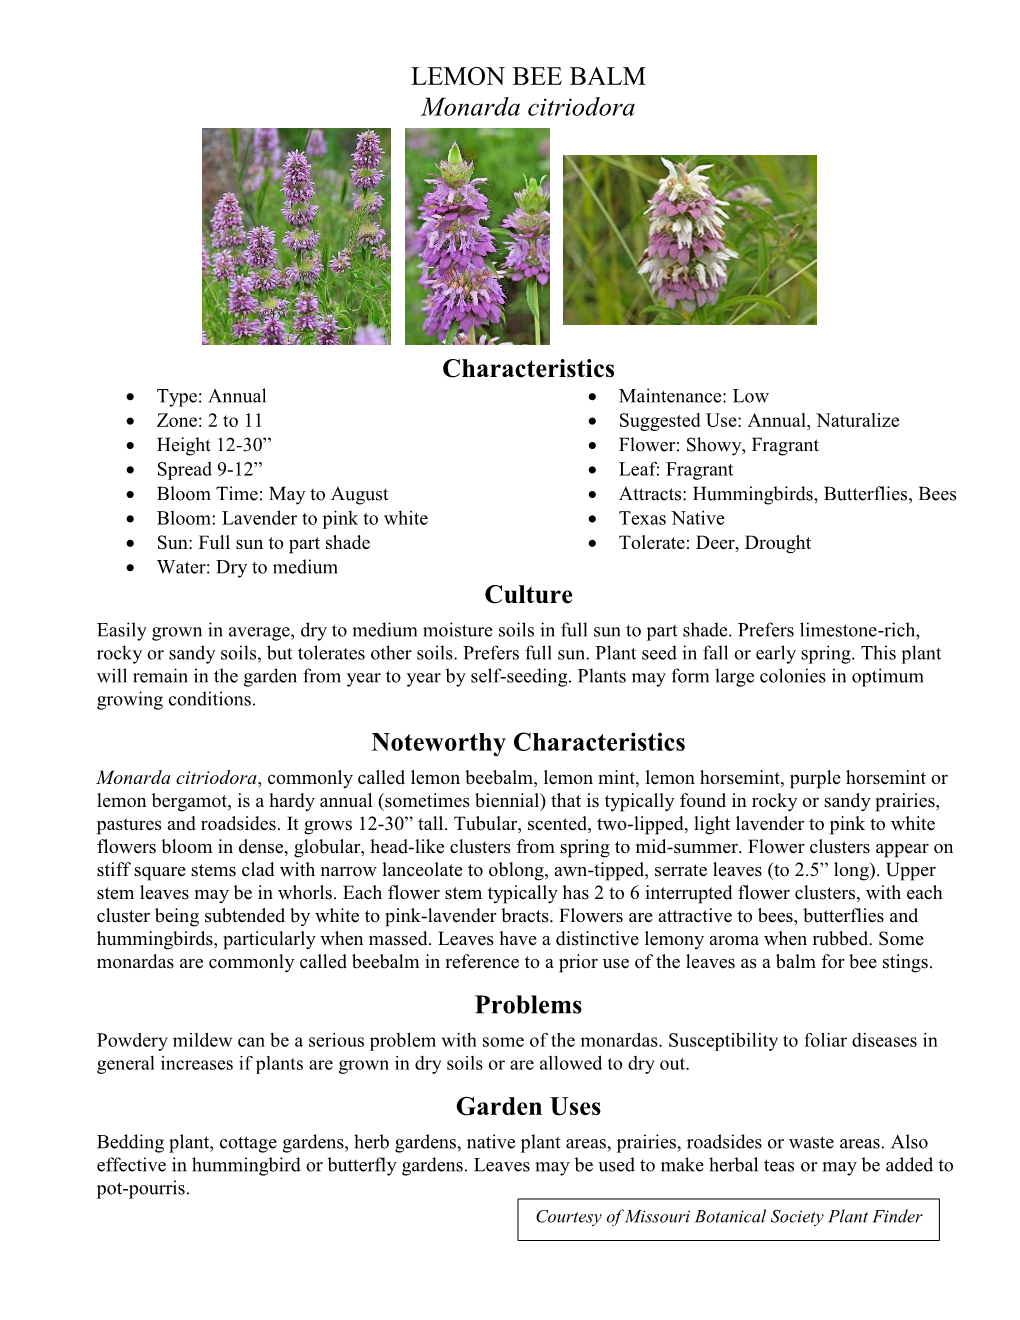 LEMON BEE BALM Monarda Citriodora Characteristics Culture